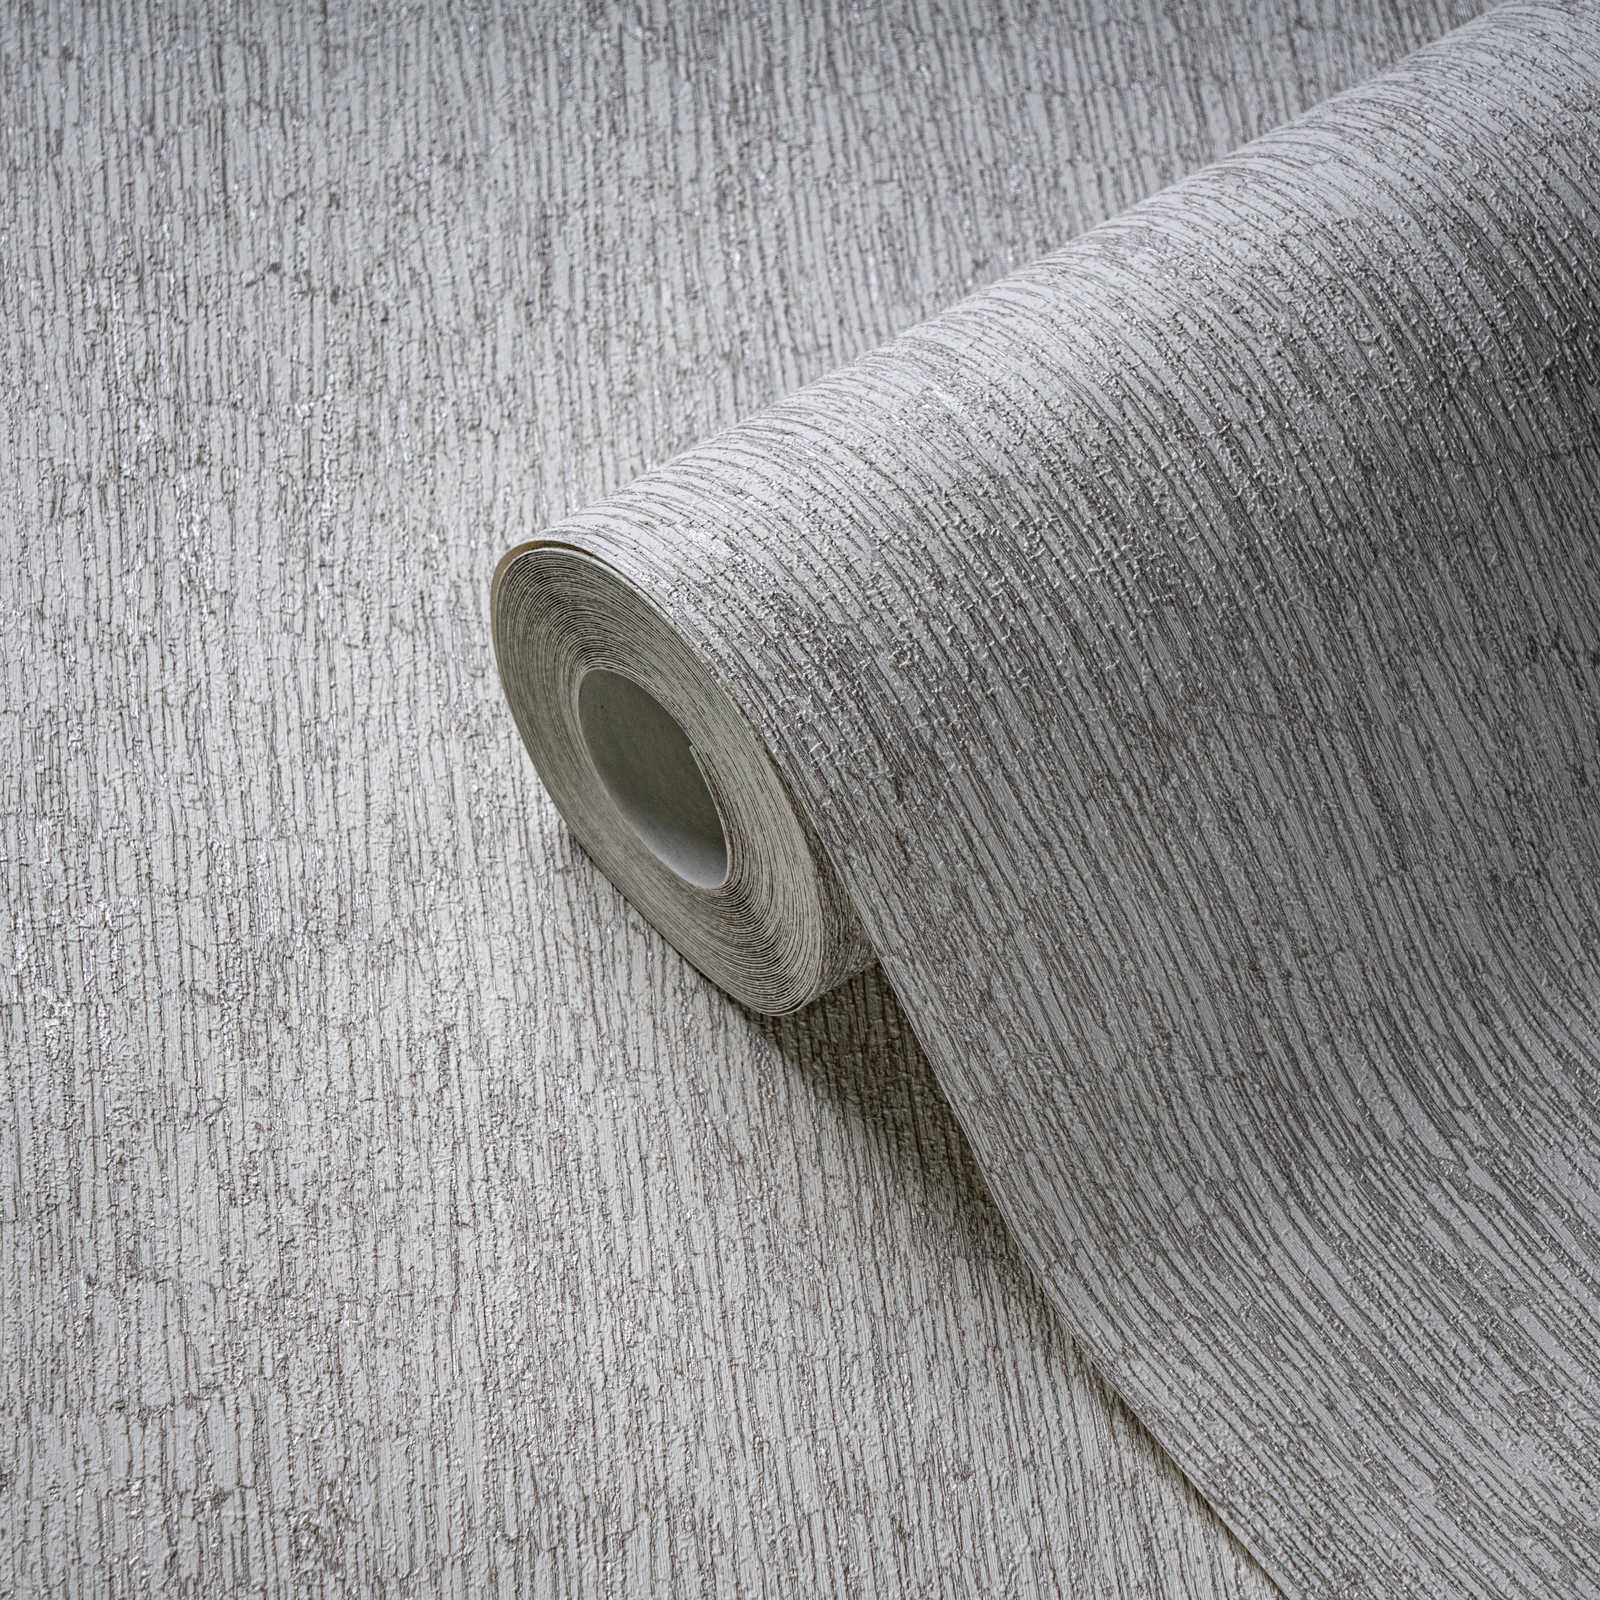             Papel pintado no tejido de aspecto textil, ligeramente brillante - blanco, gris, plata
        